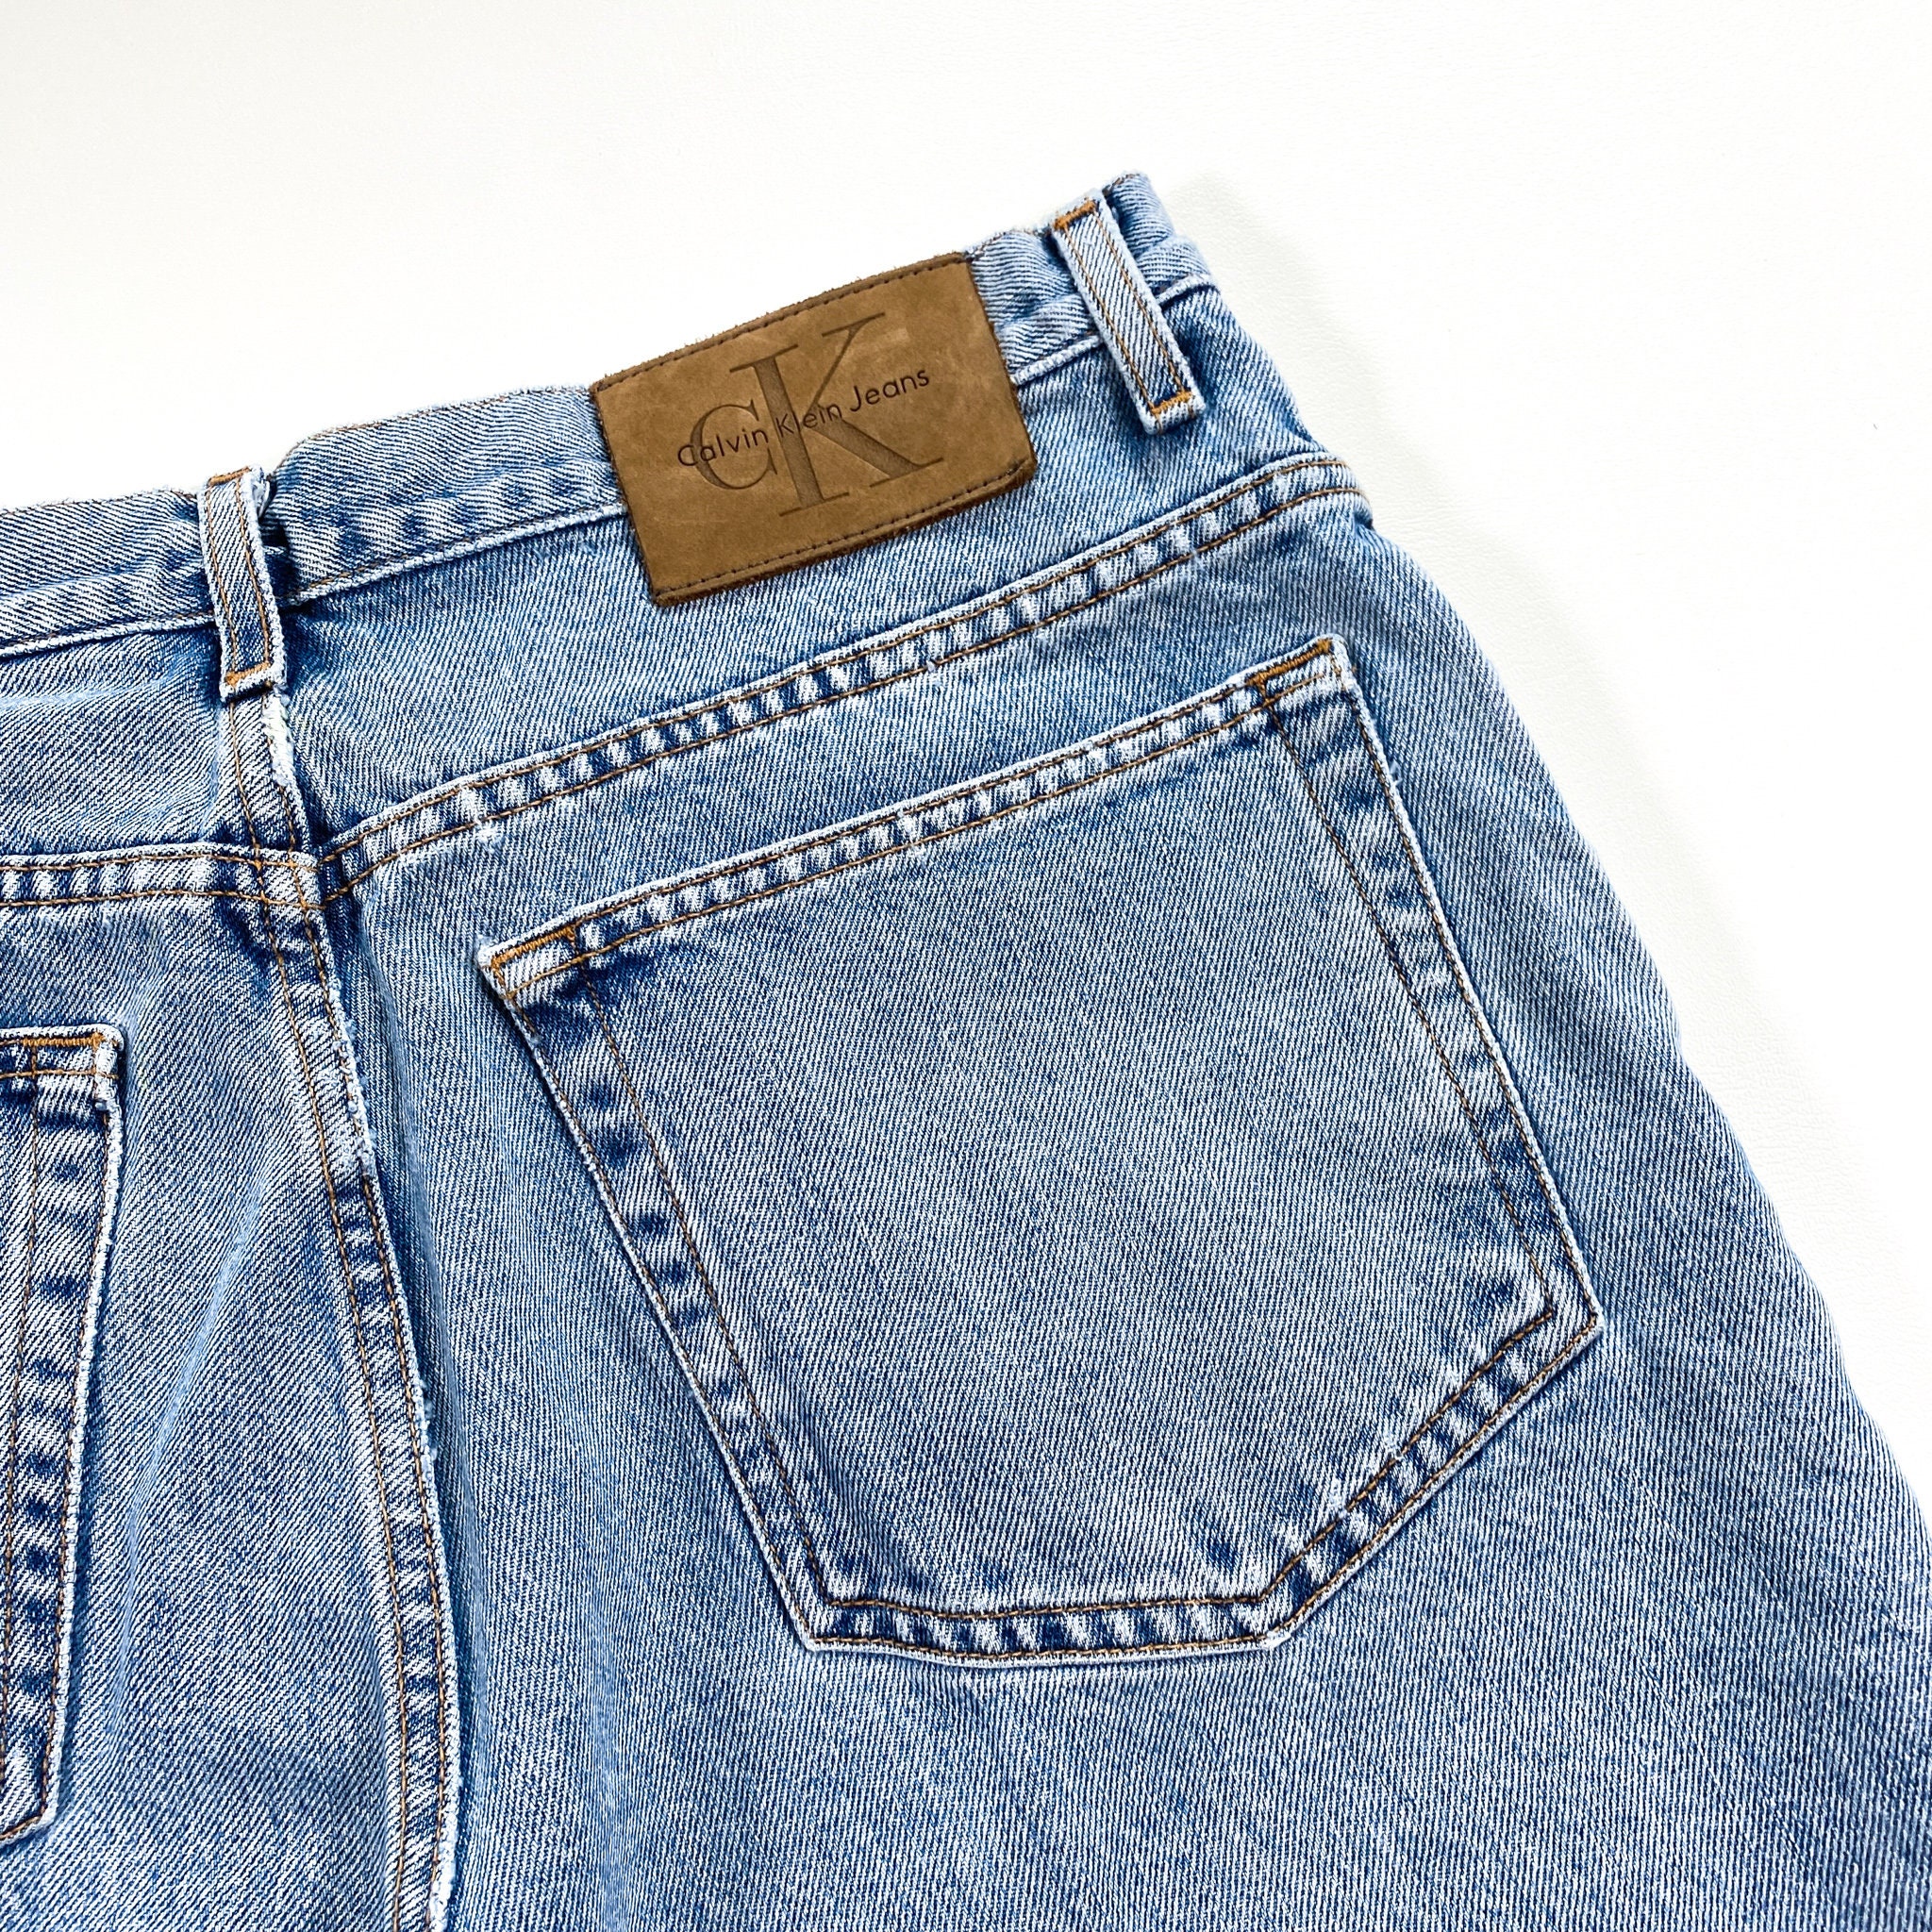 Vintage Calvin Klein Shorts 90s Calvin Klein jorts Calvin | Etsy